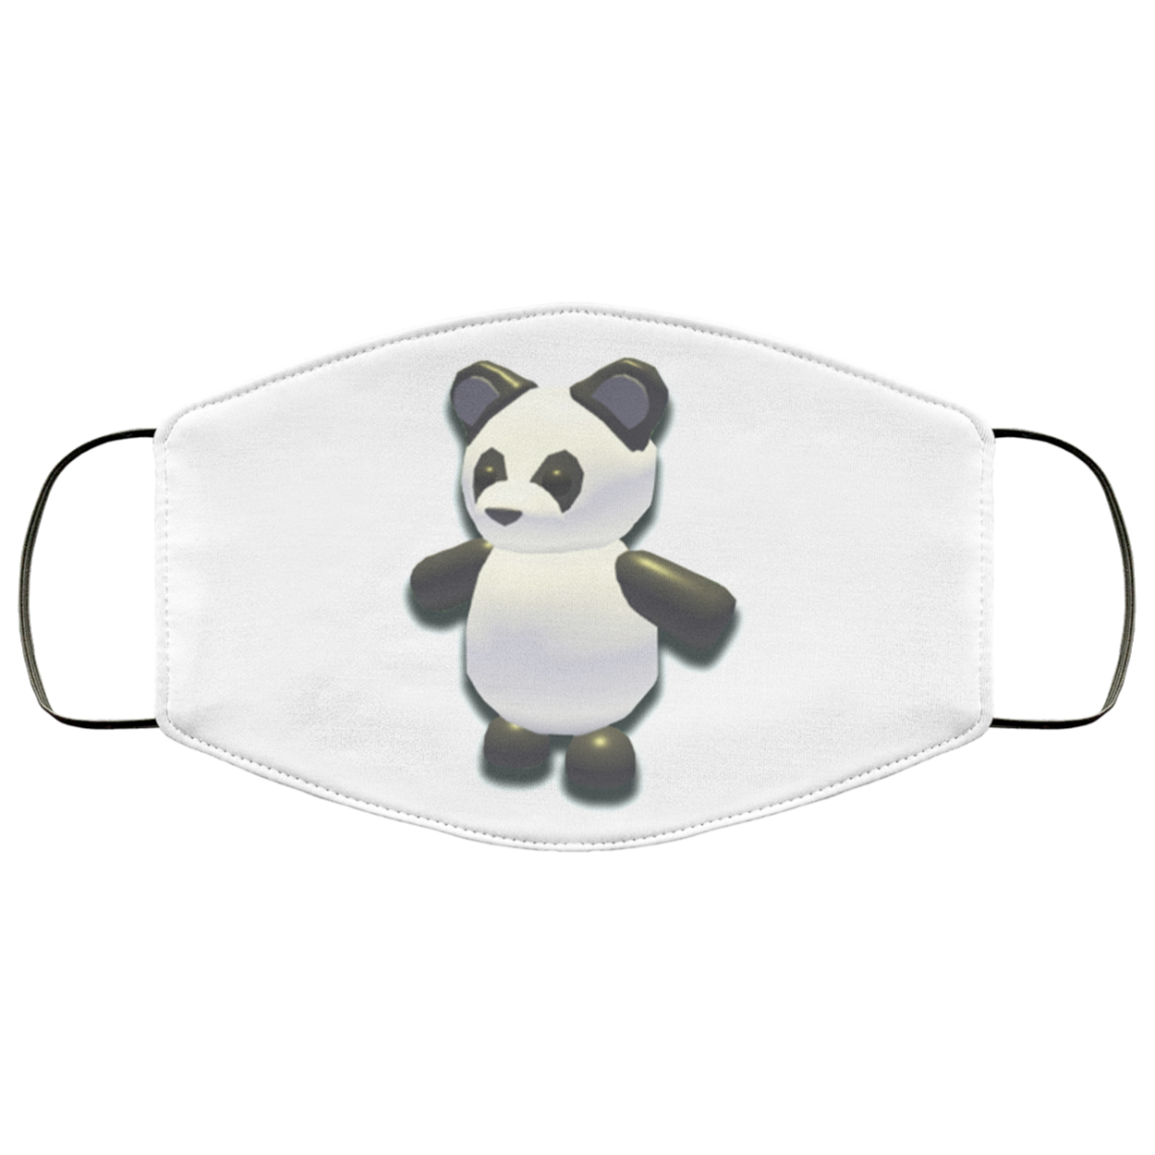 Panda Adopt Me Roblox Roblox Game Adopt Me Characters Face Mask Q Finder Trending Design T Shirt - panda image id roblox